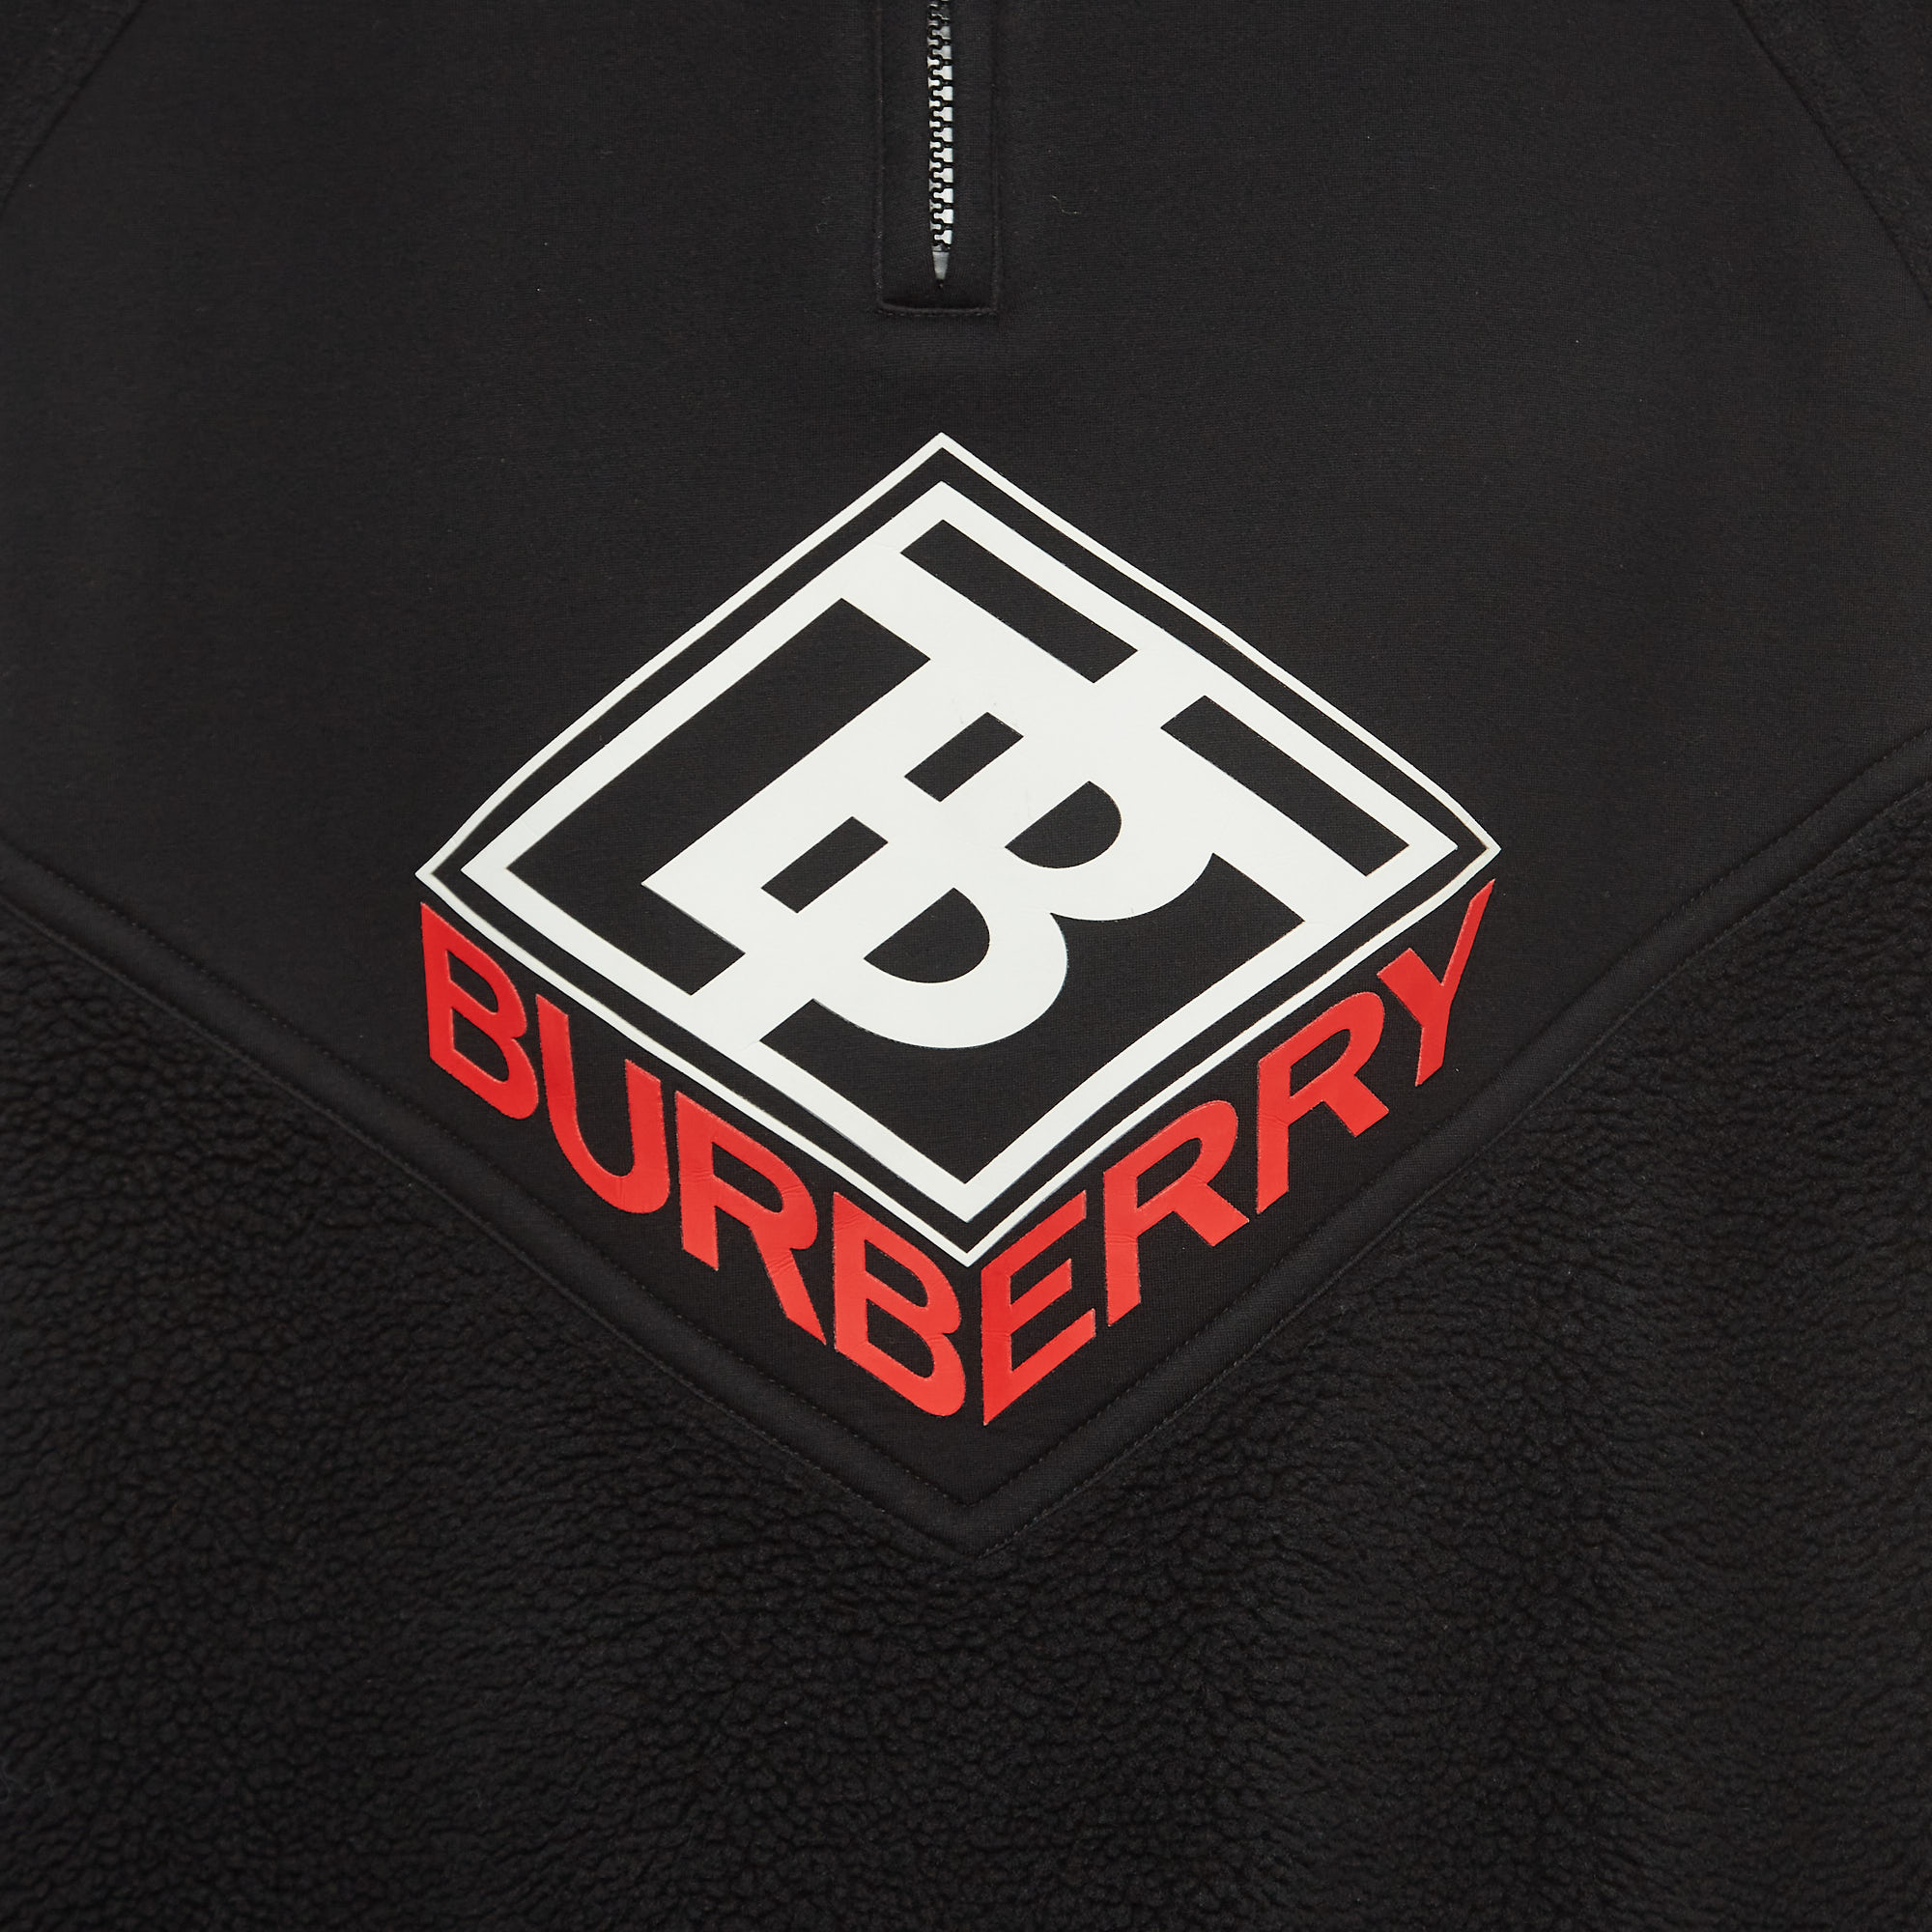 Burberry Black Modal Logo Detailed Sweater XL